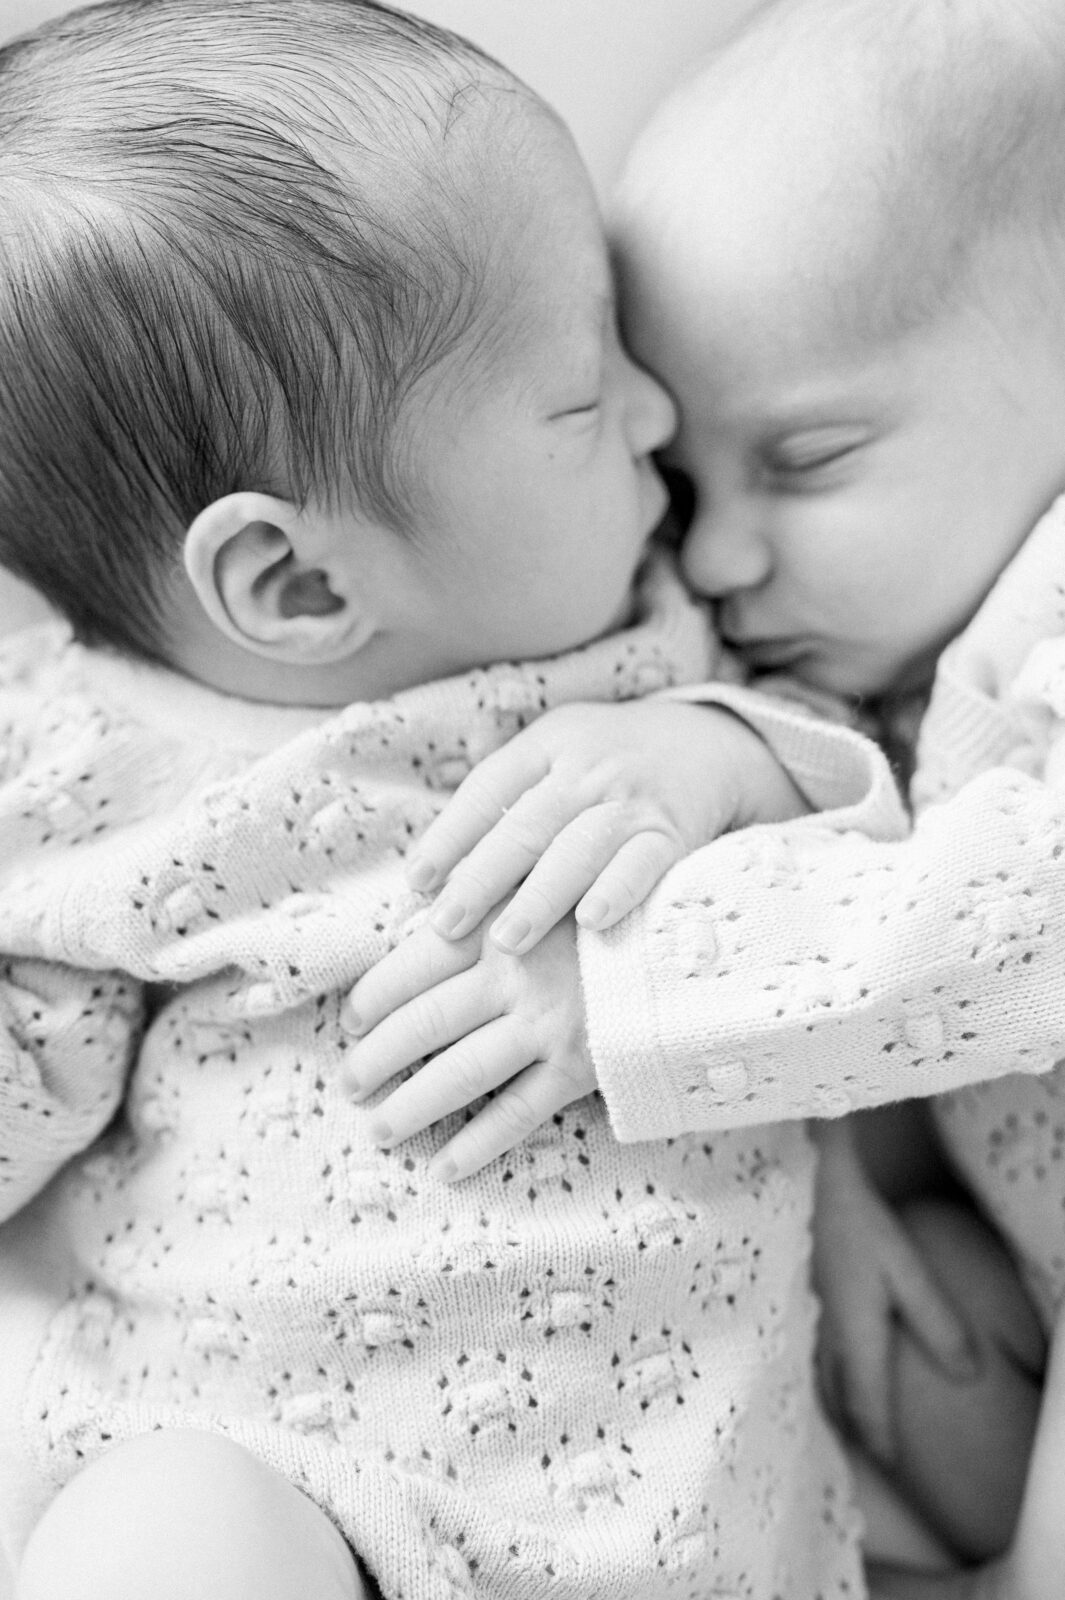 Twin newborns snuggling together